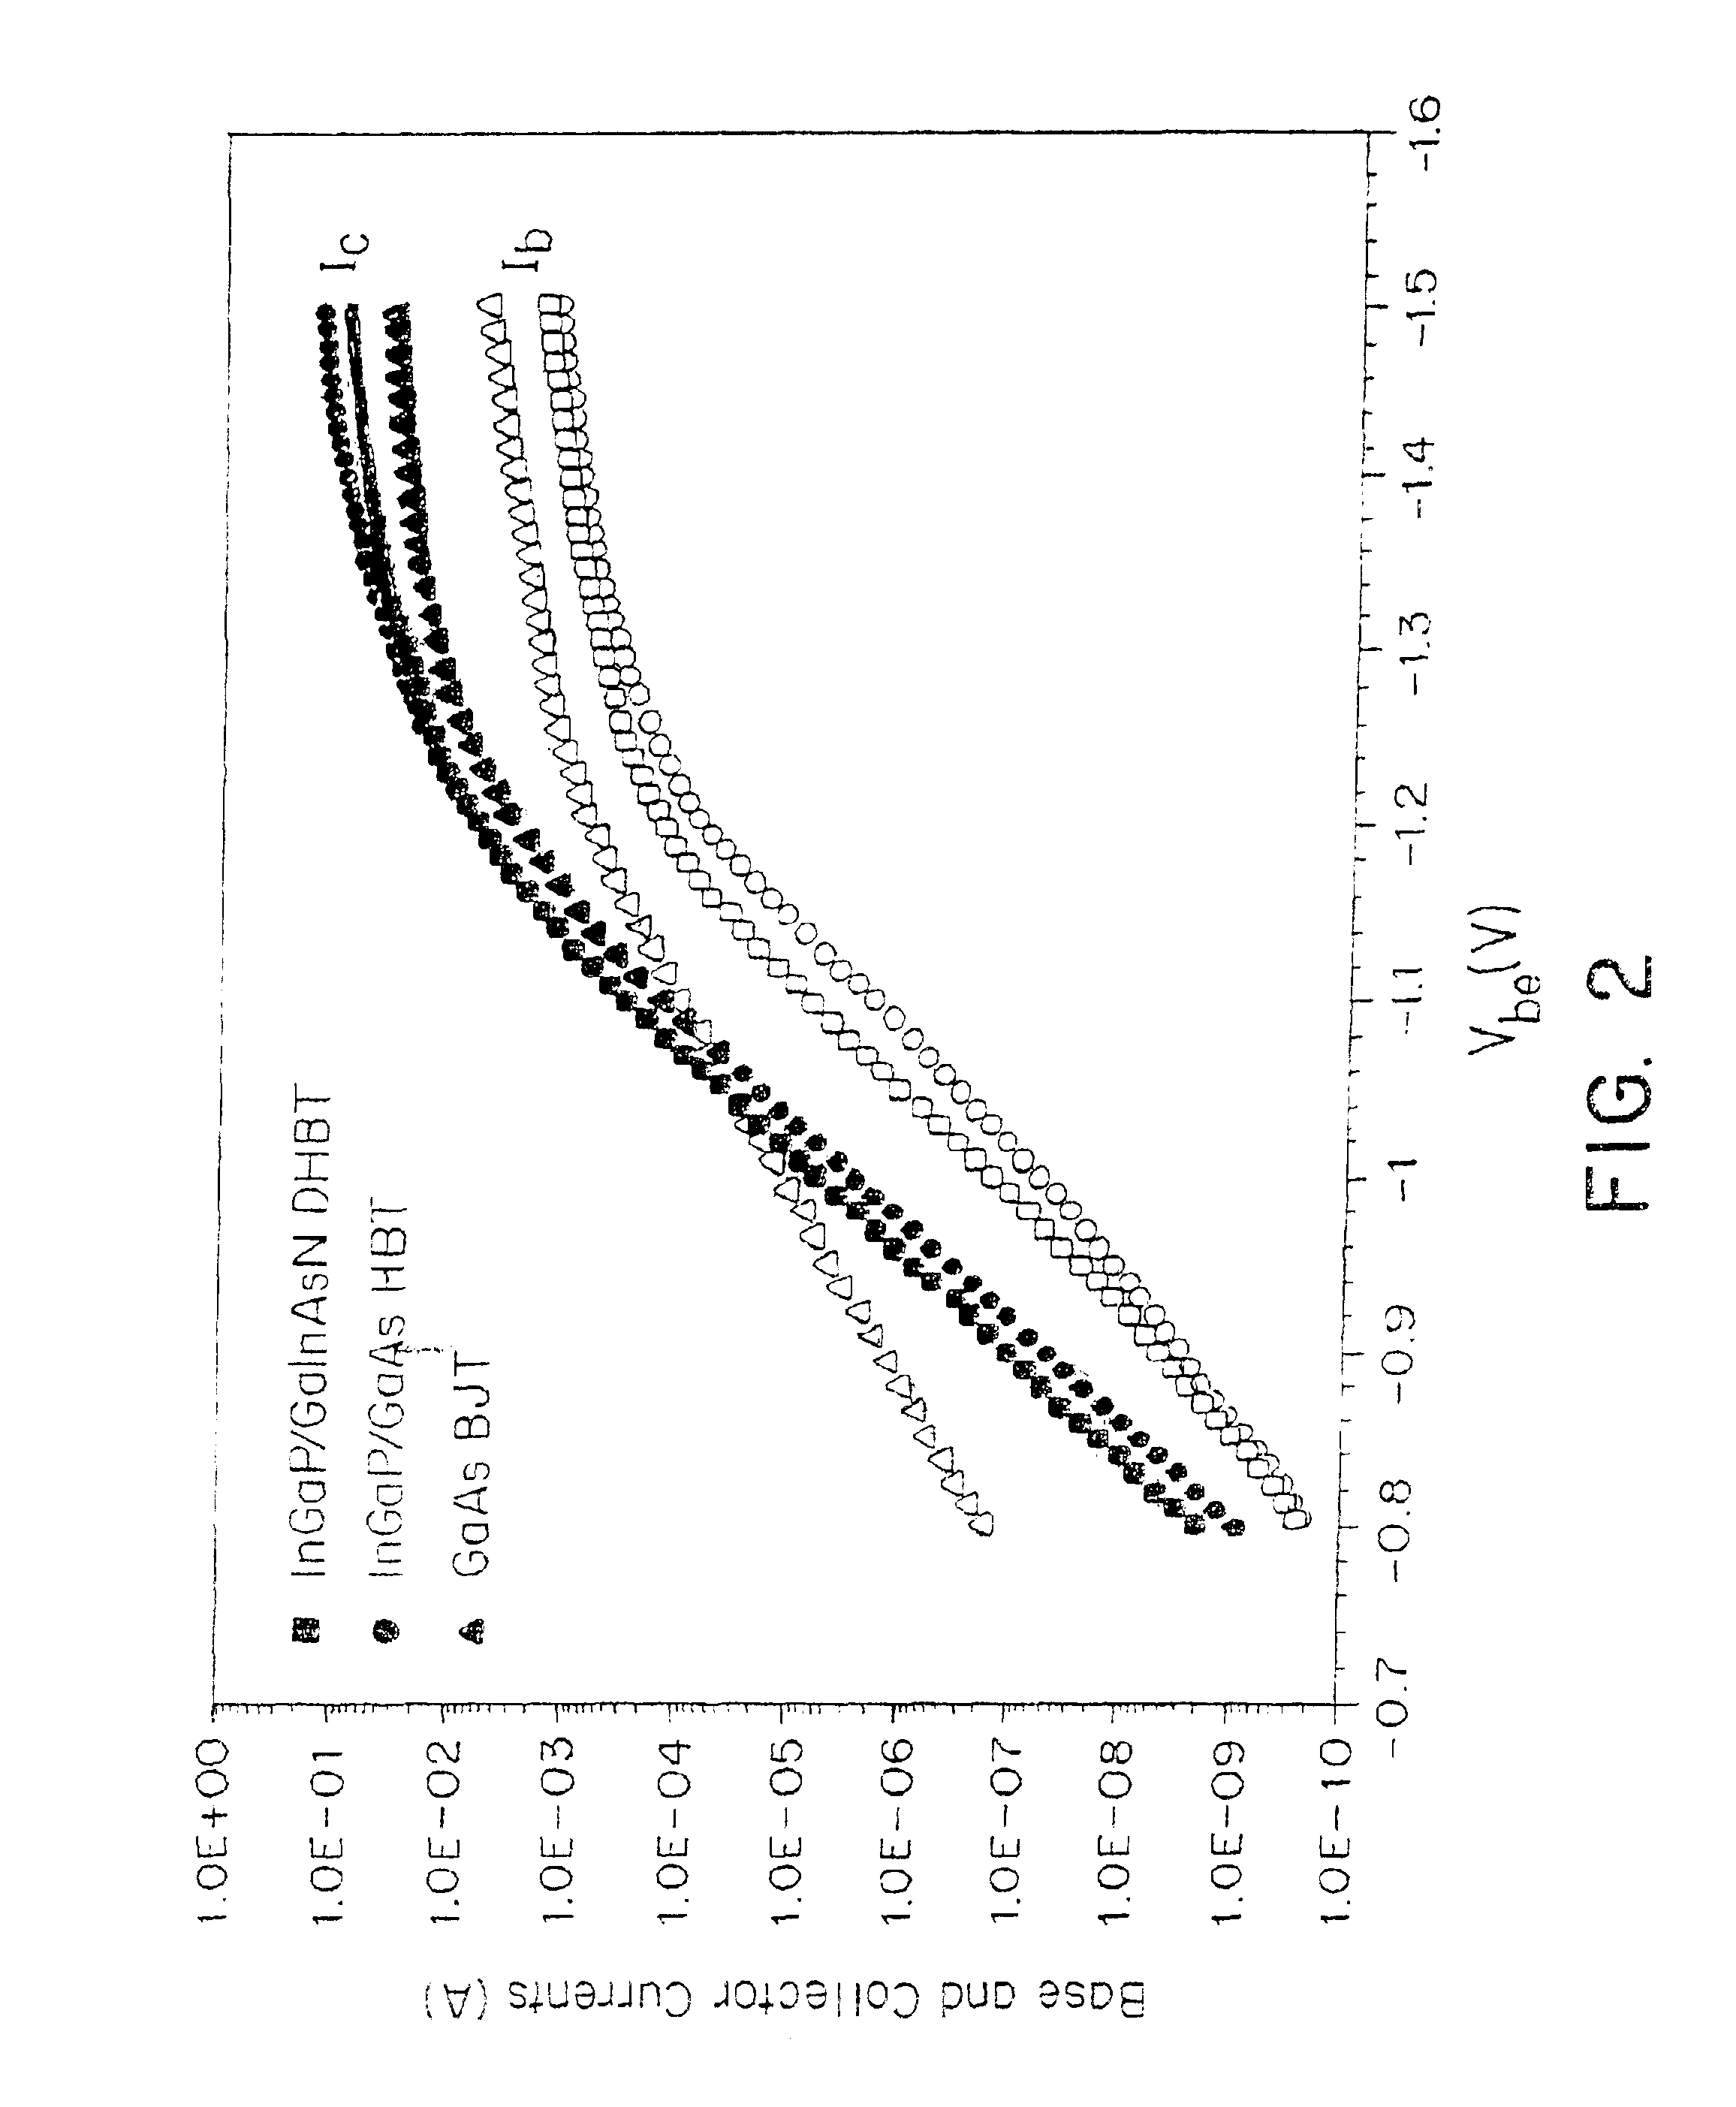 Bipolar transistor with graded base layer